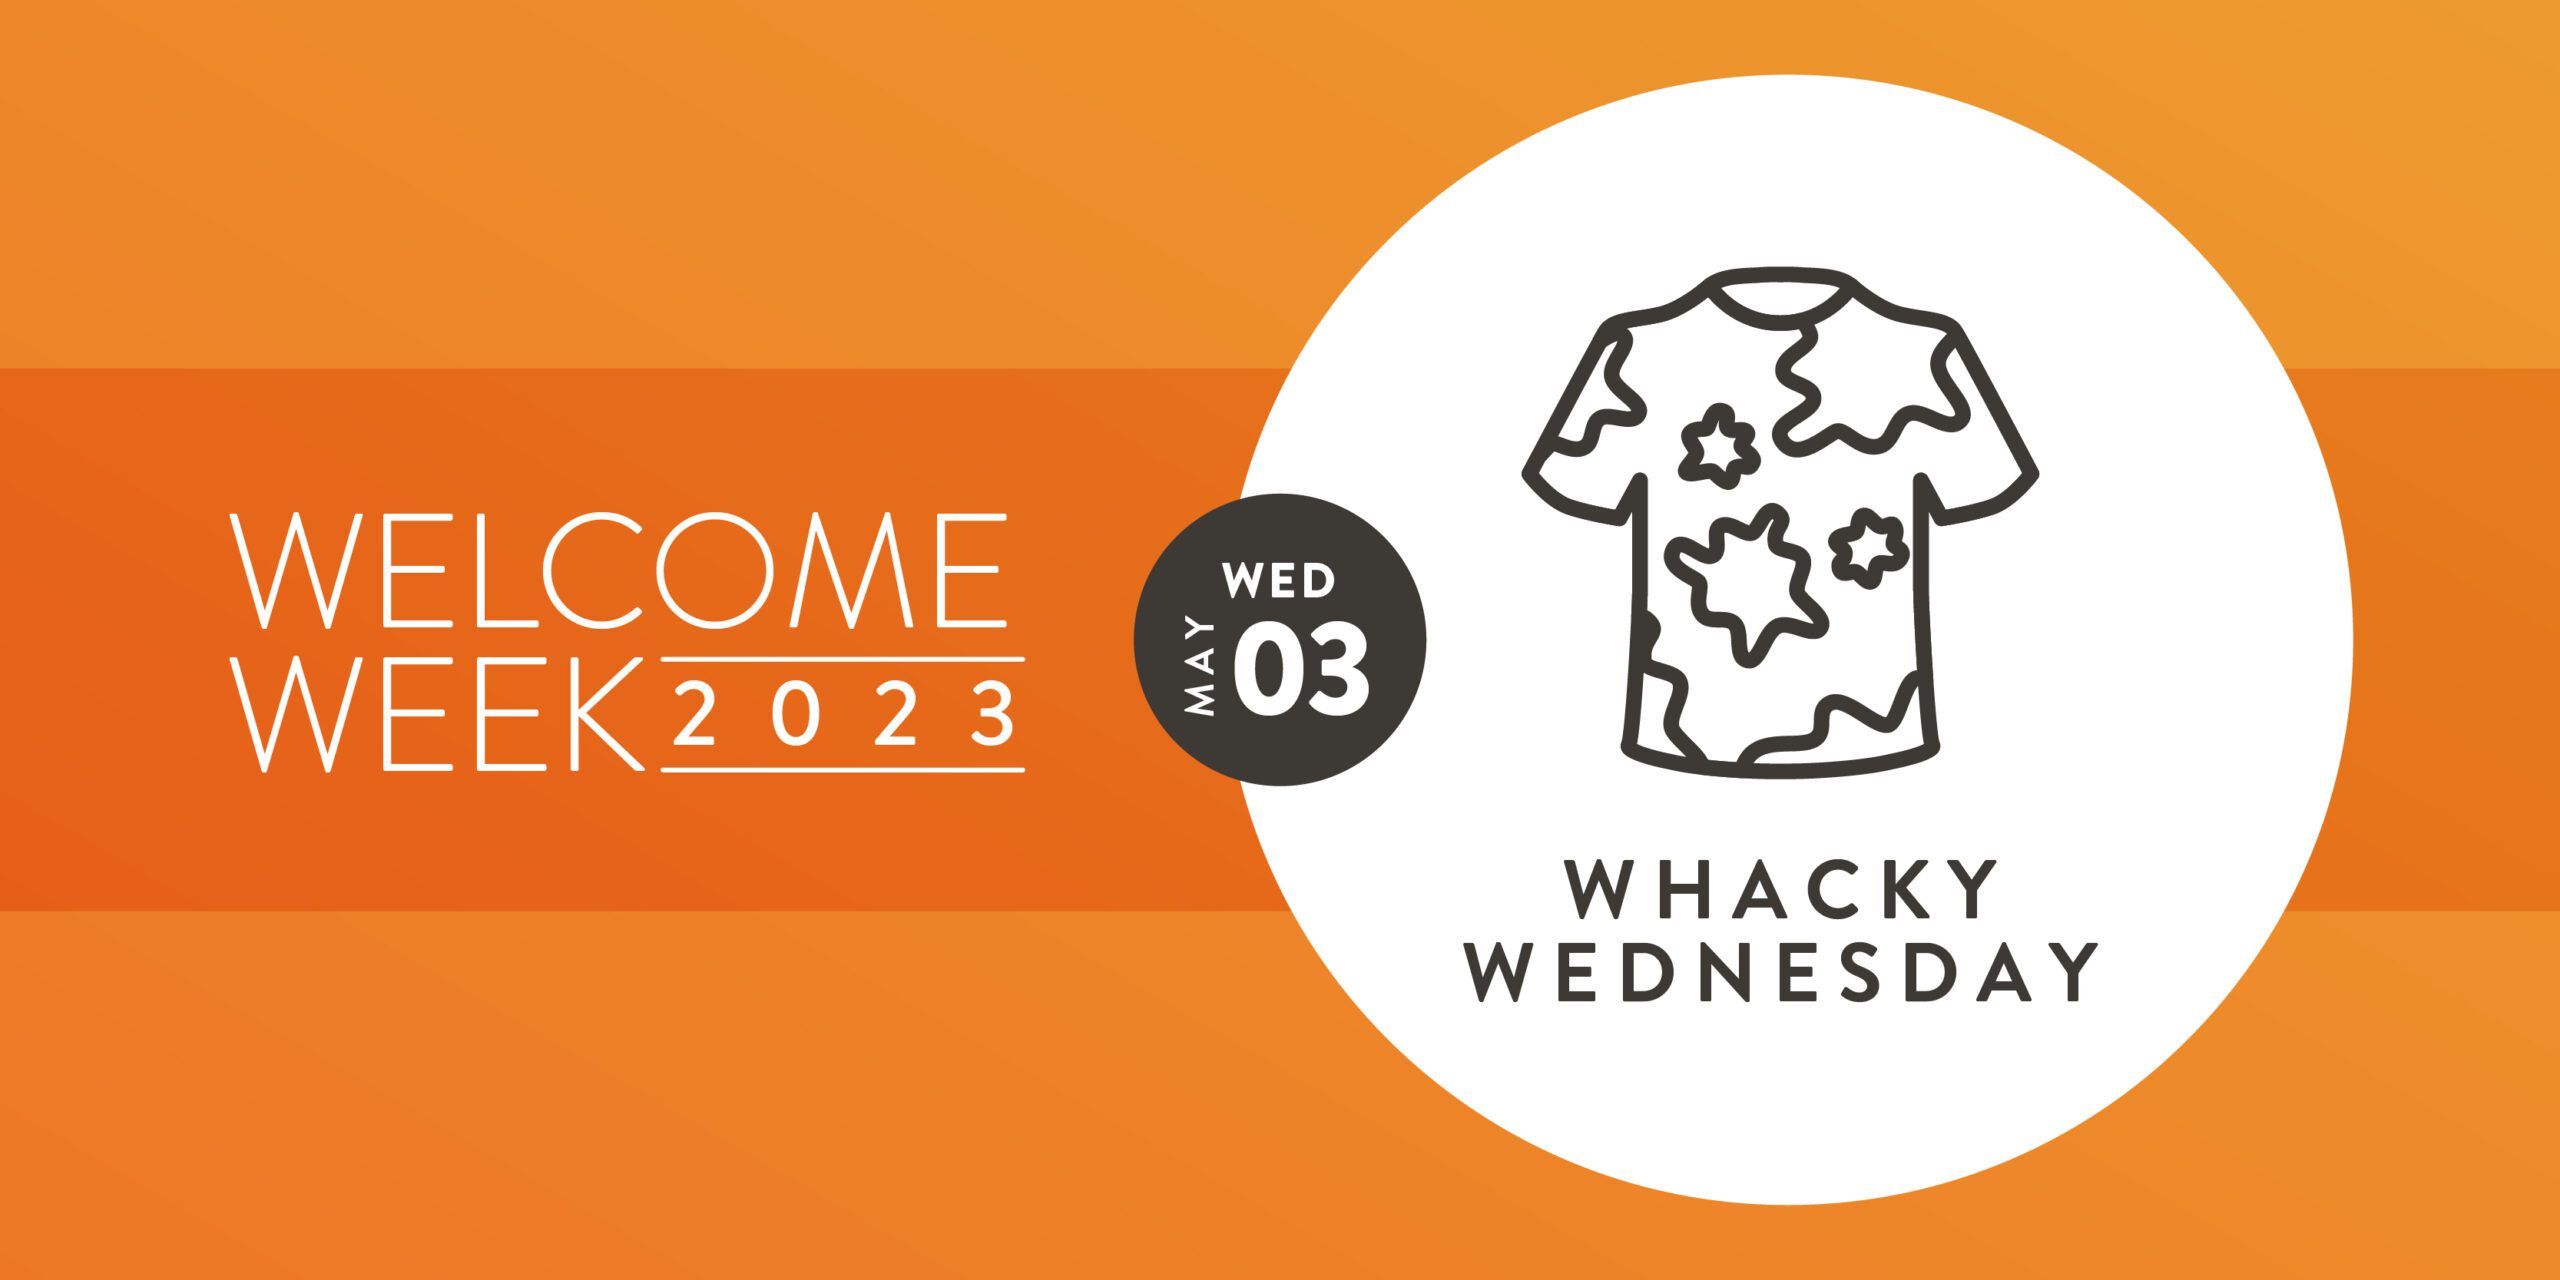 Welcome Week: Whacky Wednesday